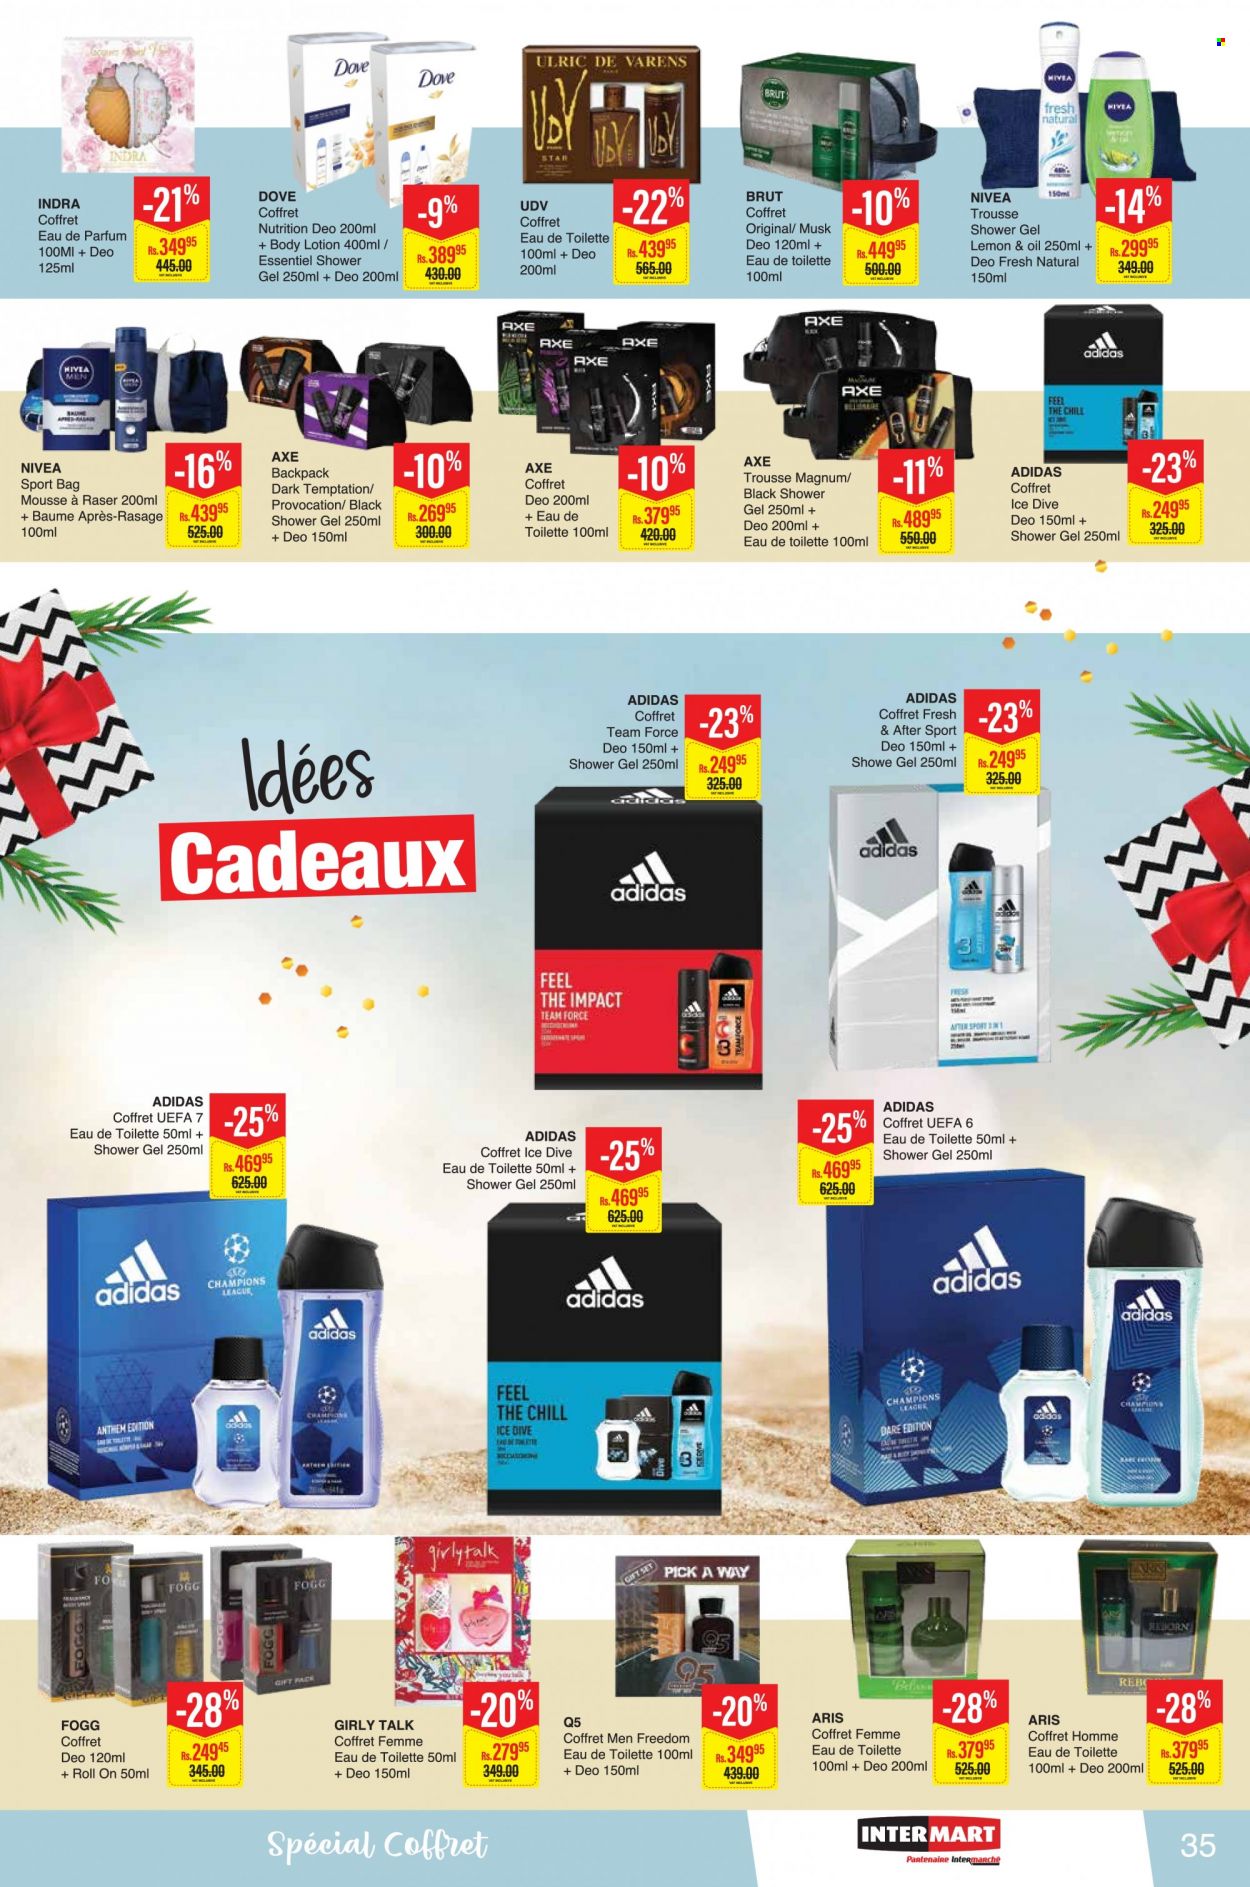 <magasin> - <du DD/MM/YYYY au DD/MM/YYYY> - Produits soldés - ,<products from flyers>. Page 35. 